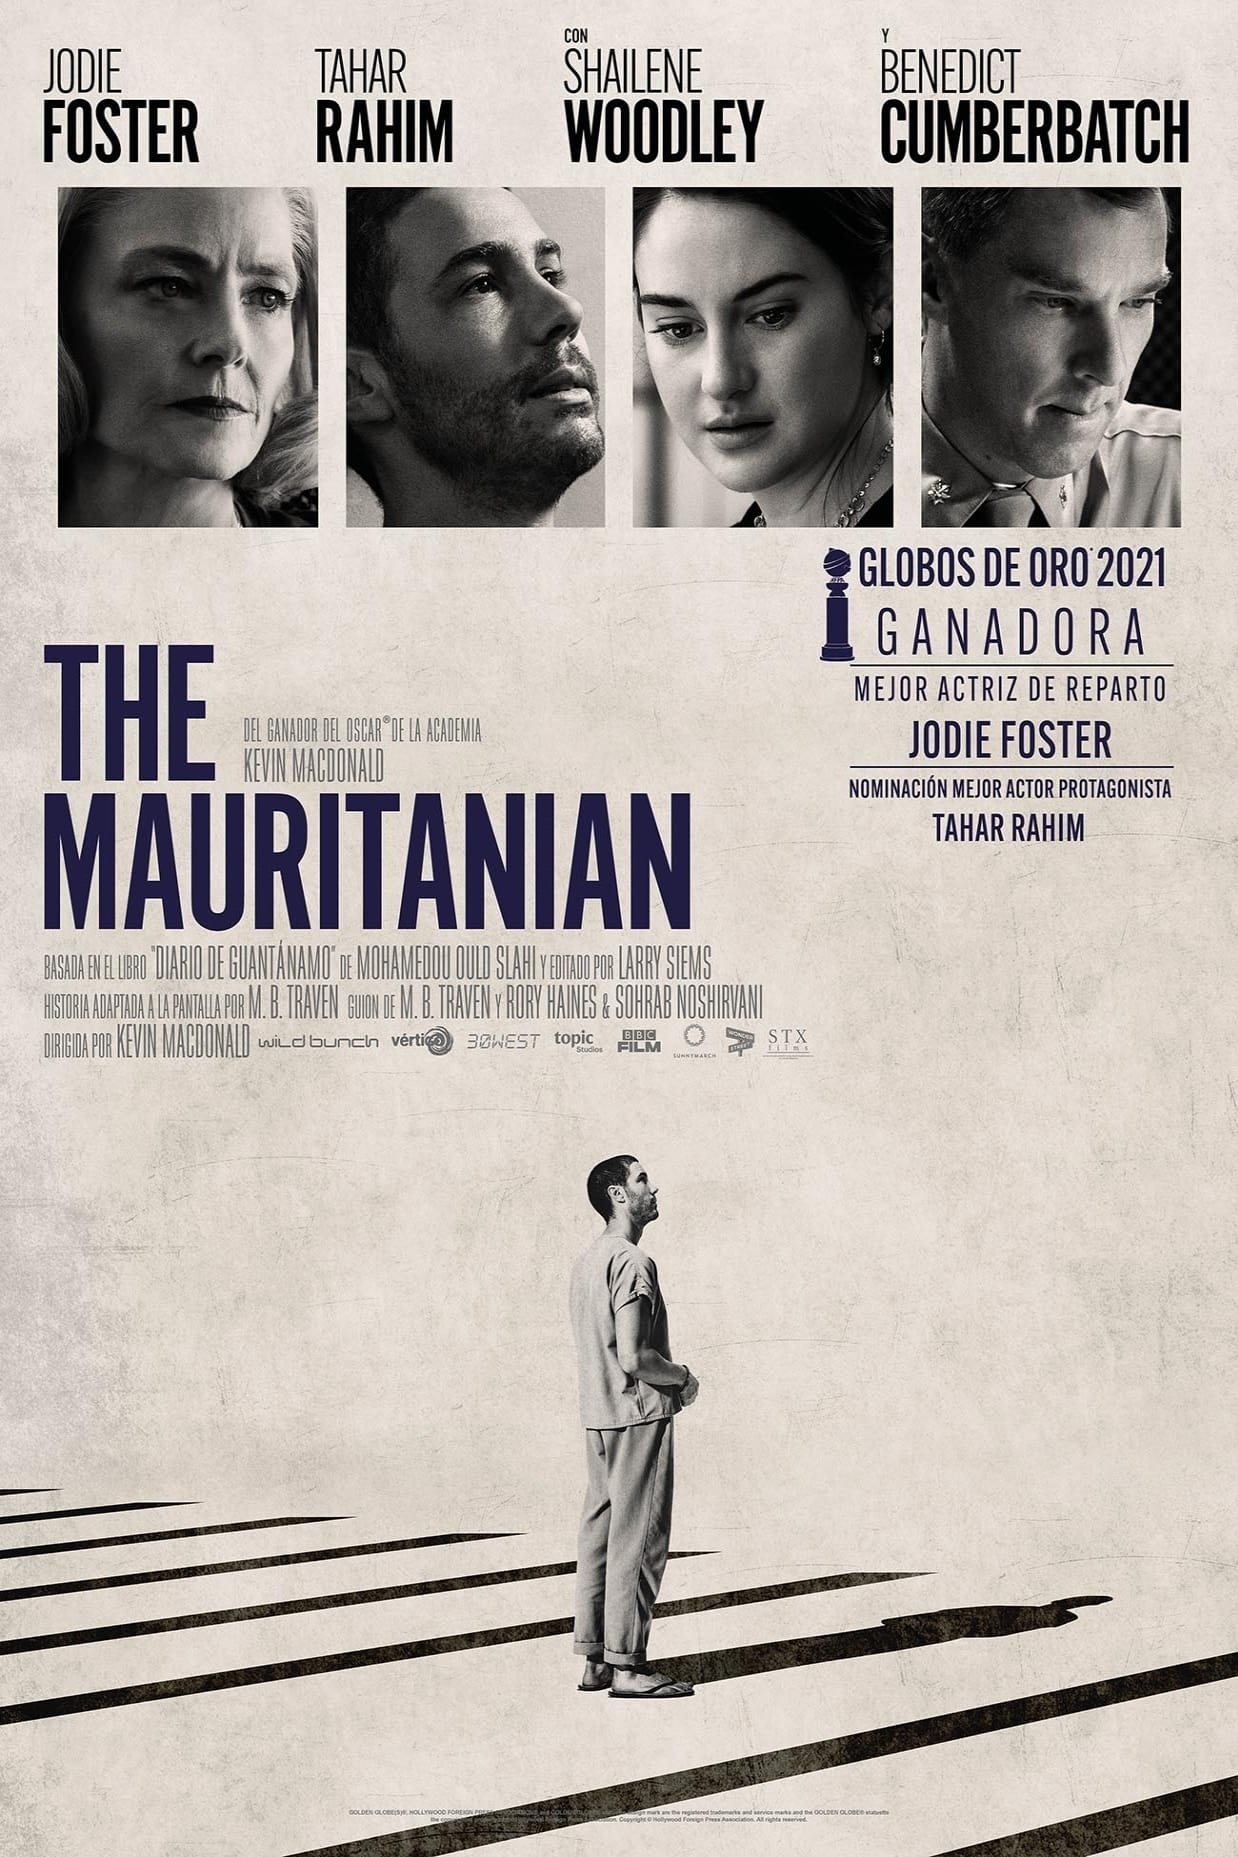 The Mauritanian poster